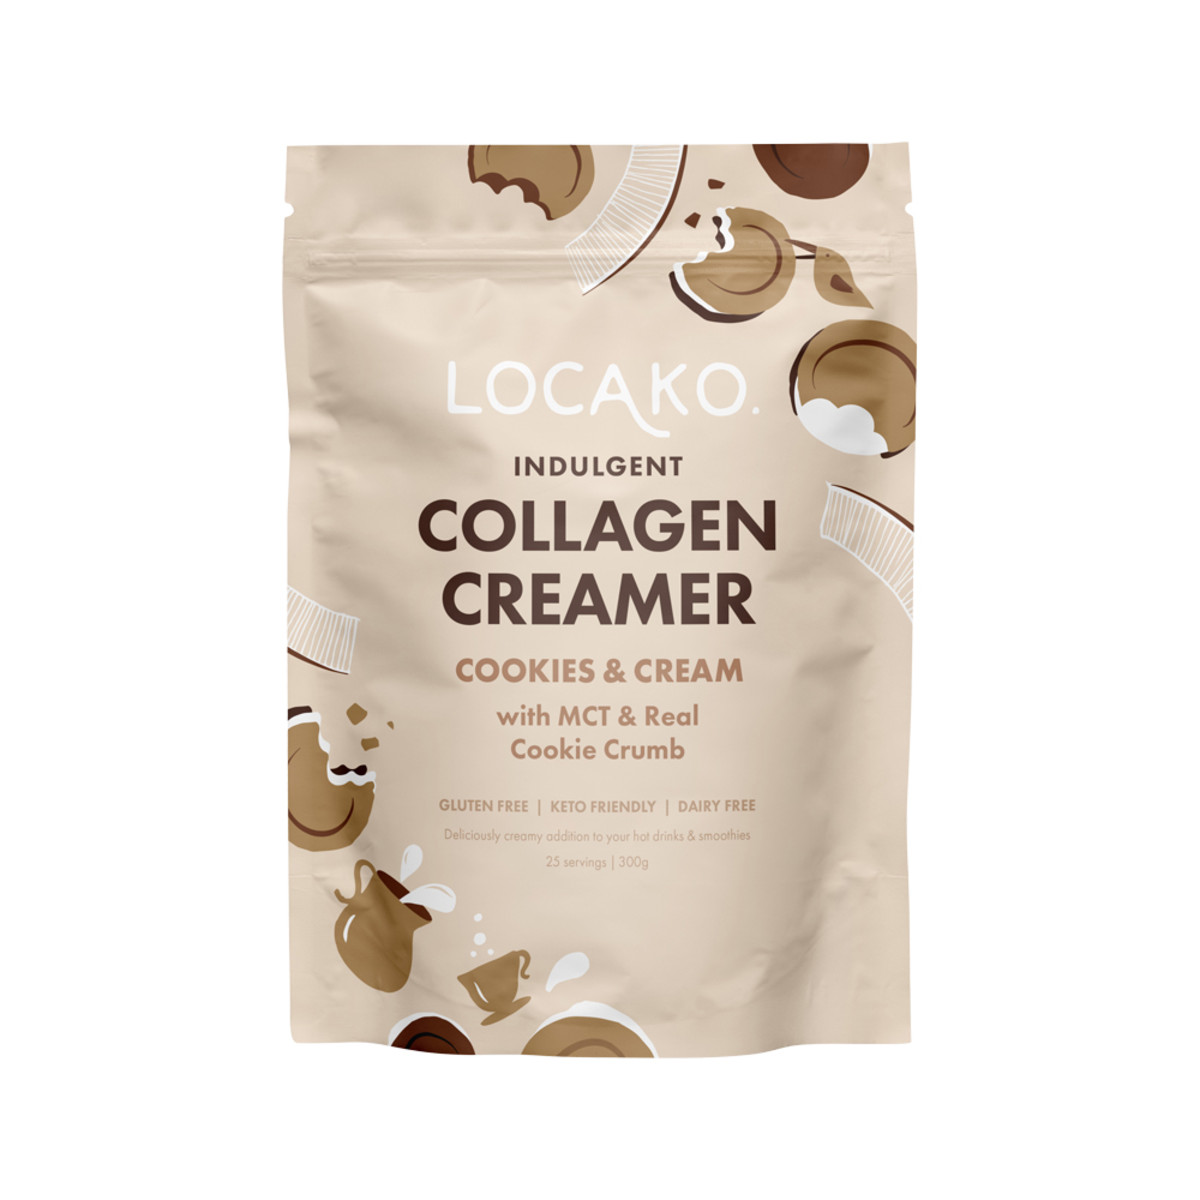 LOCAKO - Collagen Creamer Indulgent (Cookies and Cream) 300g